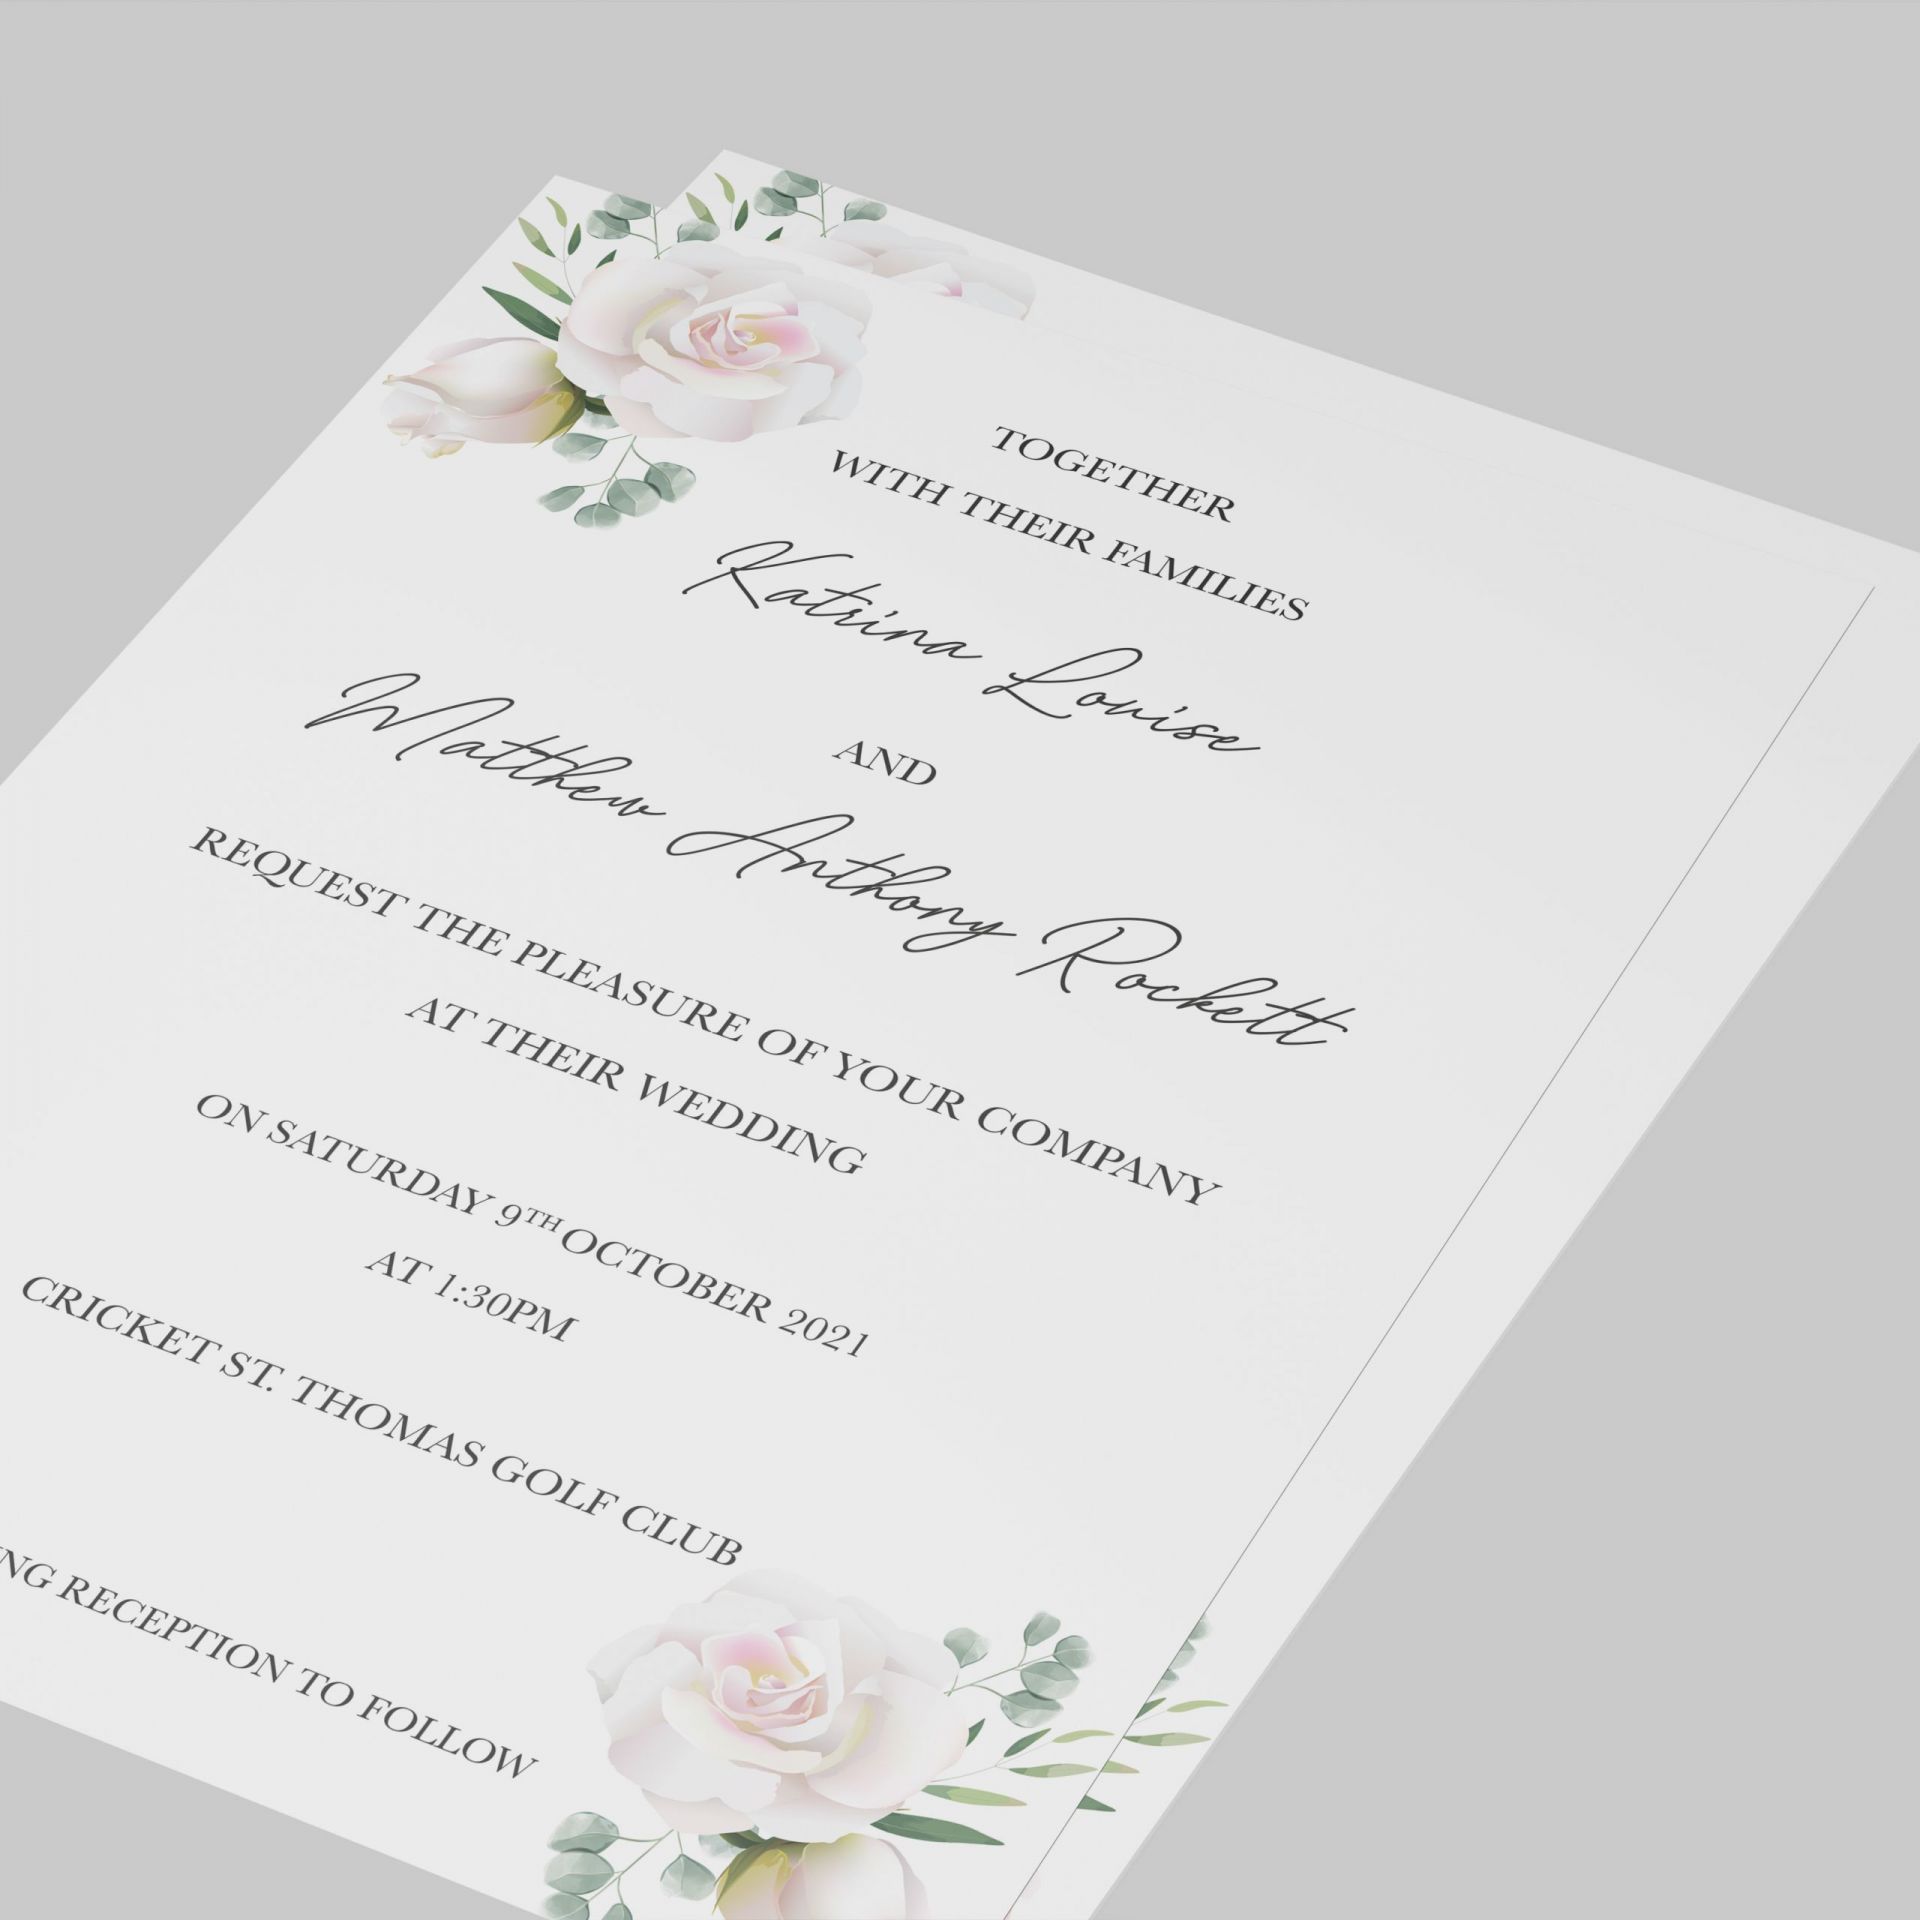 Wedding stationery design and print